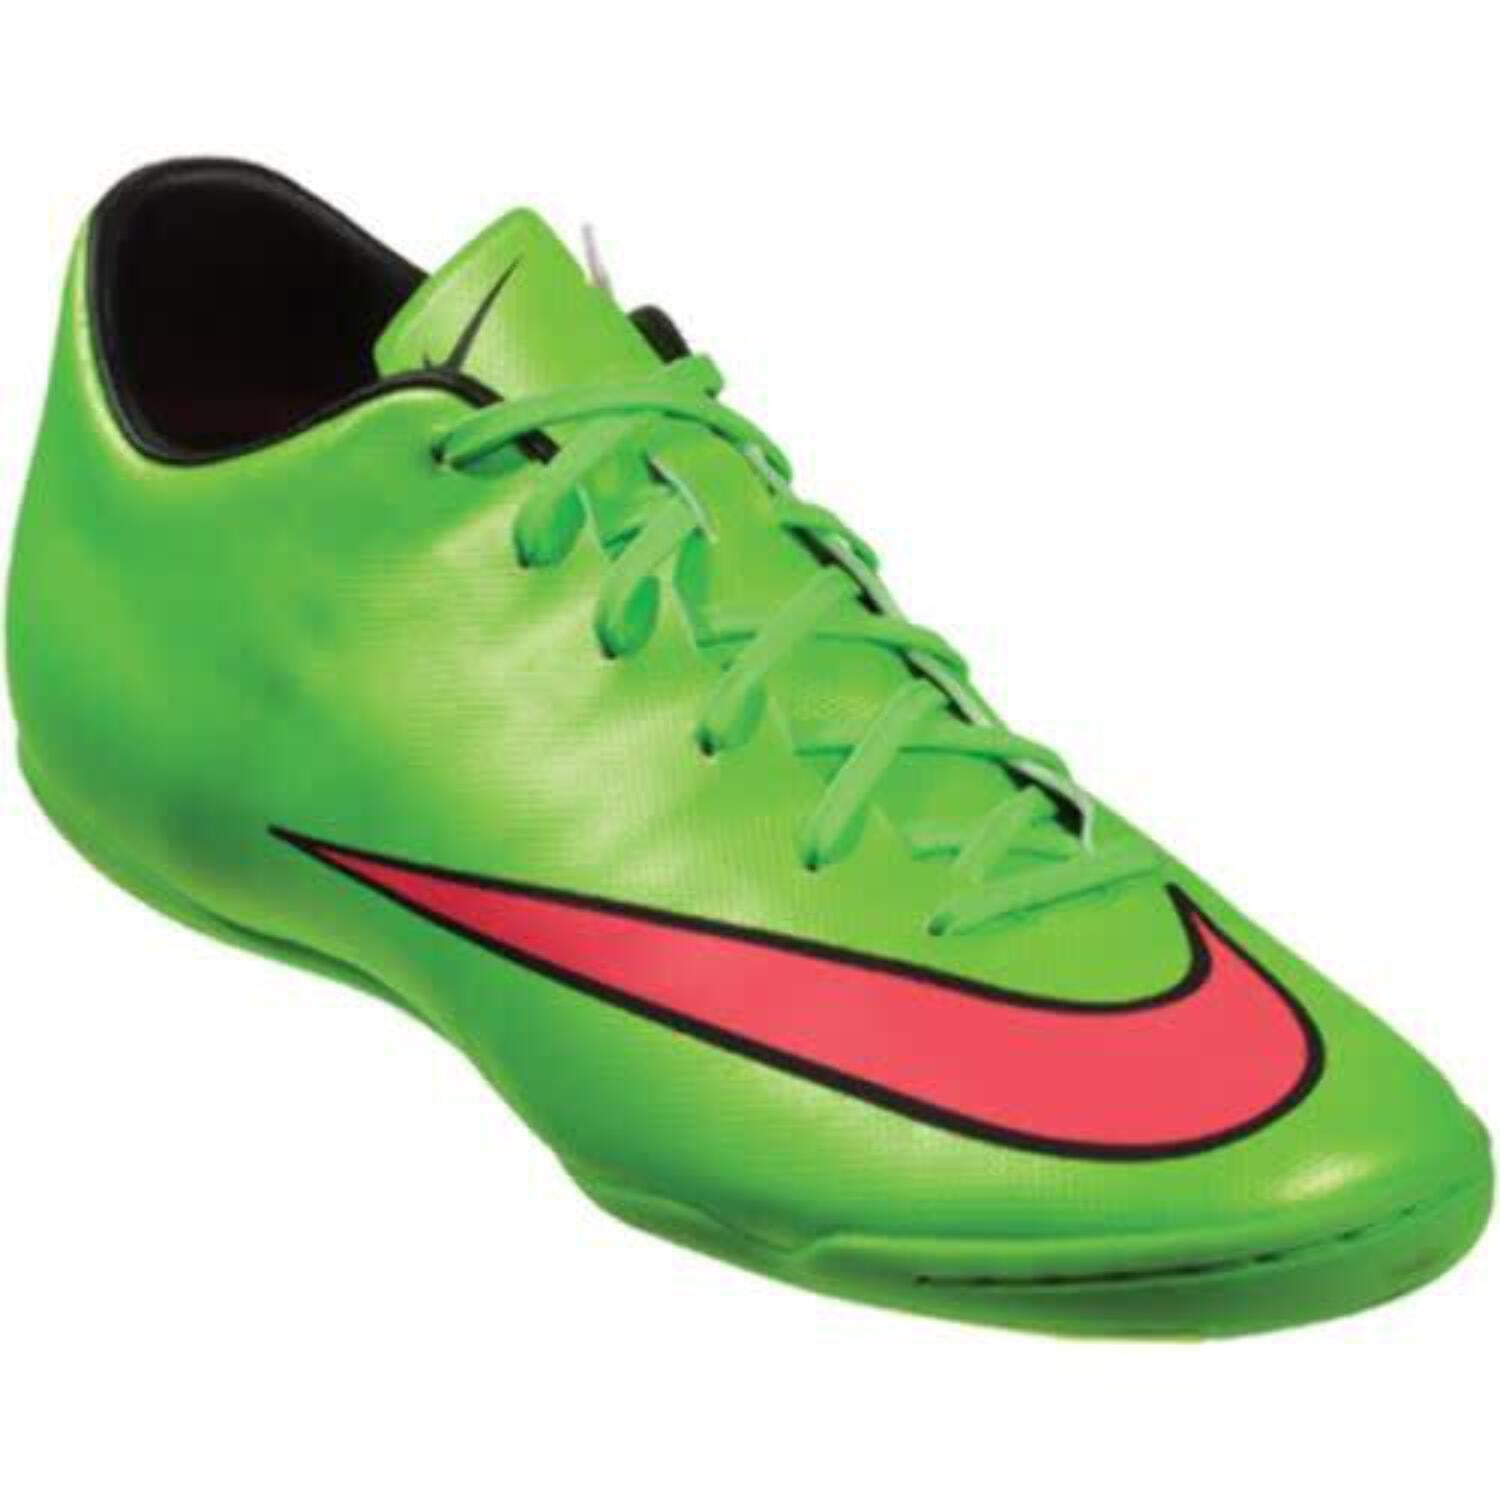 Nike Mercurial Victory IV IC Indoor - Neon Green /Red 12 Walmart.com